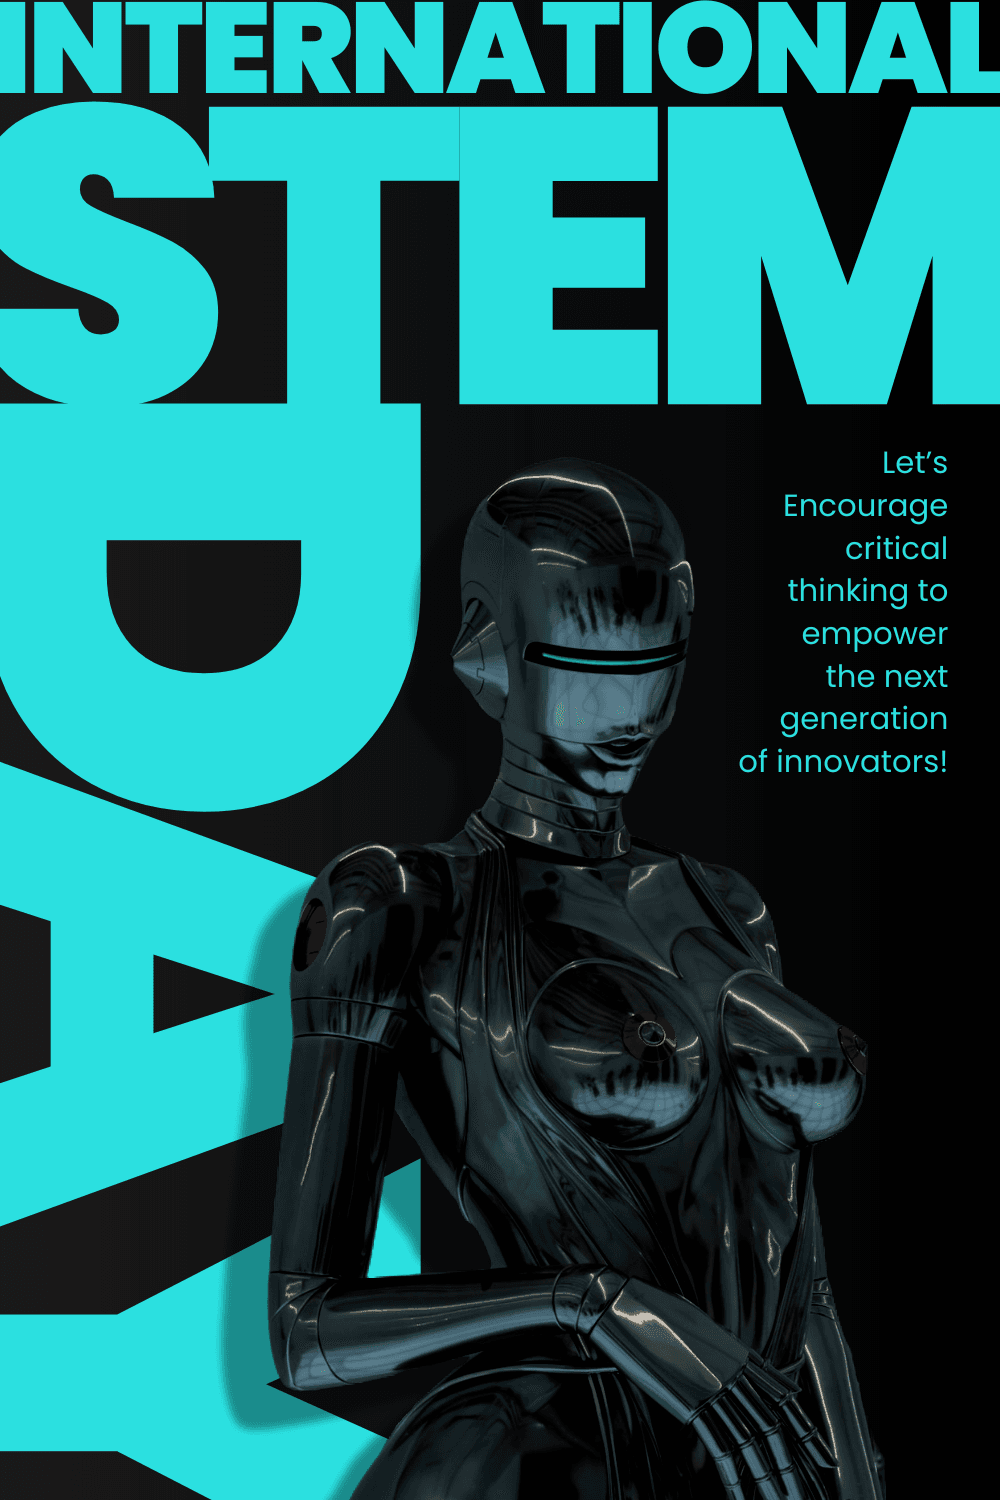 robot-illustrated-international-stem-day-pinterest-pin-template-thumbnail-img